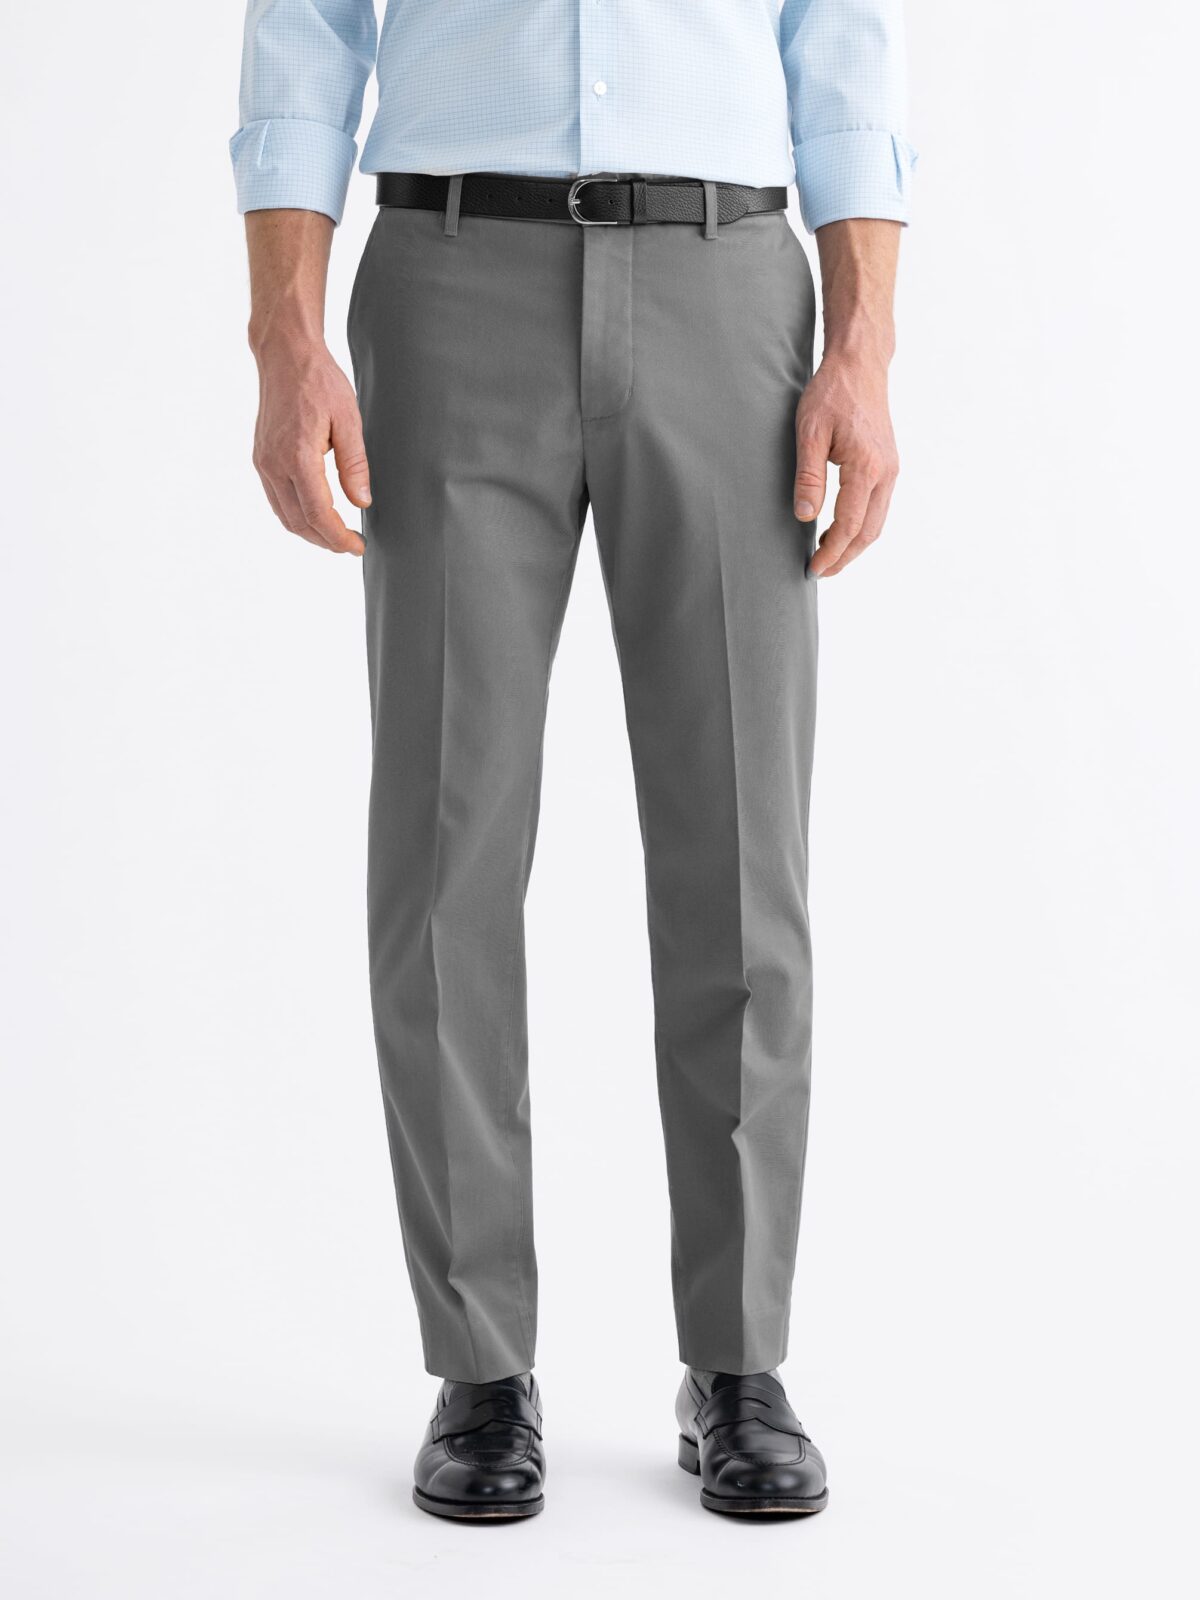 Zara Uniform Men's Gray Work Pants Slacks US Size 34 Inseam 30